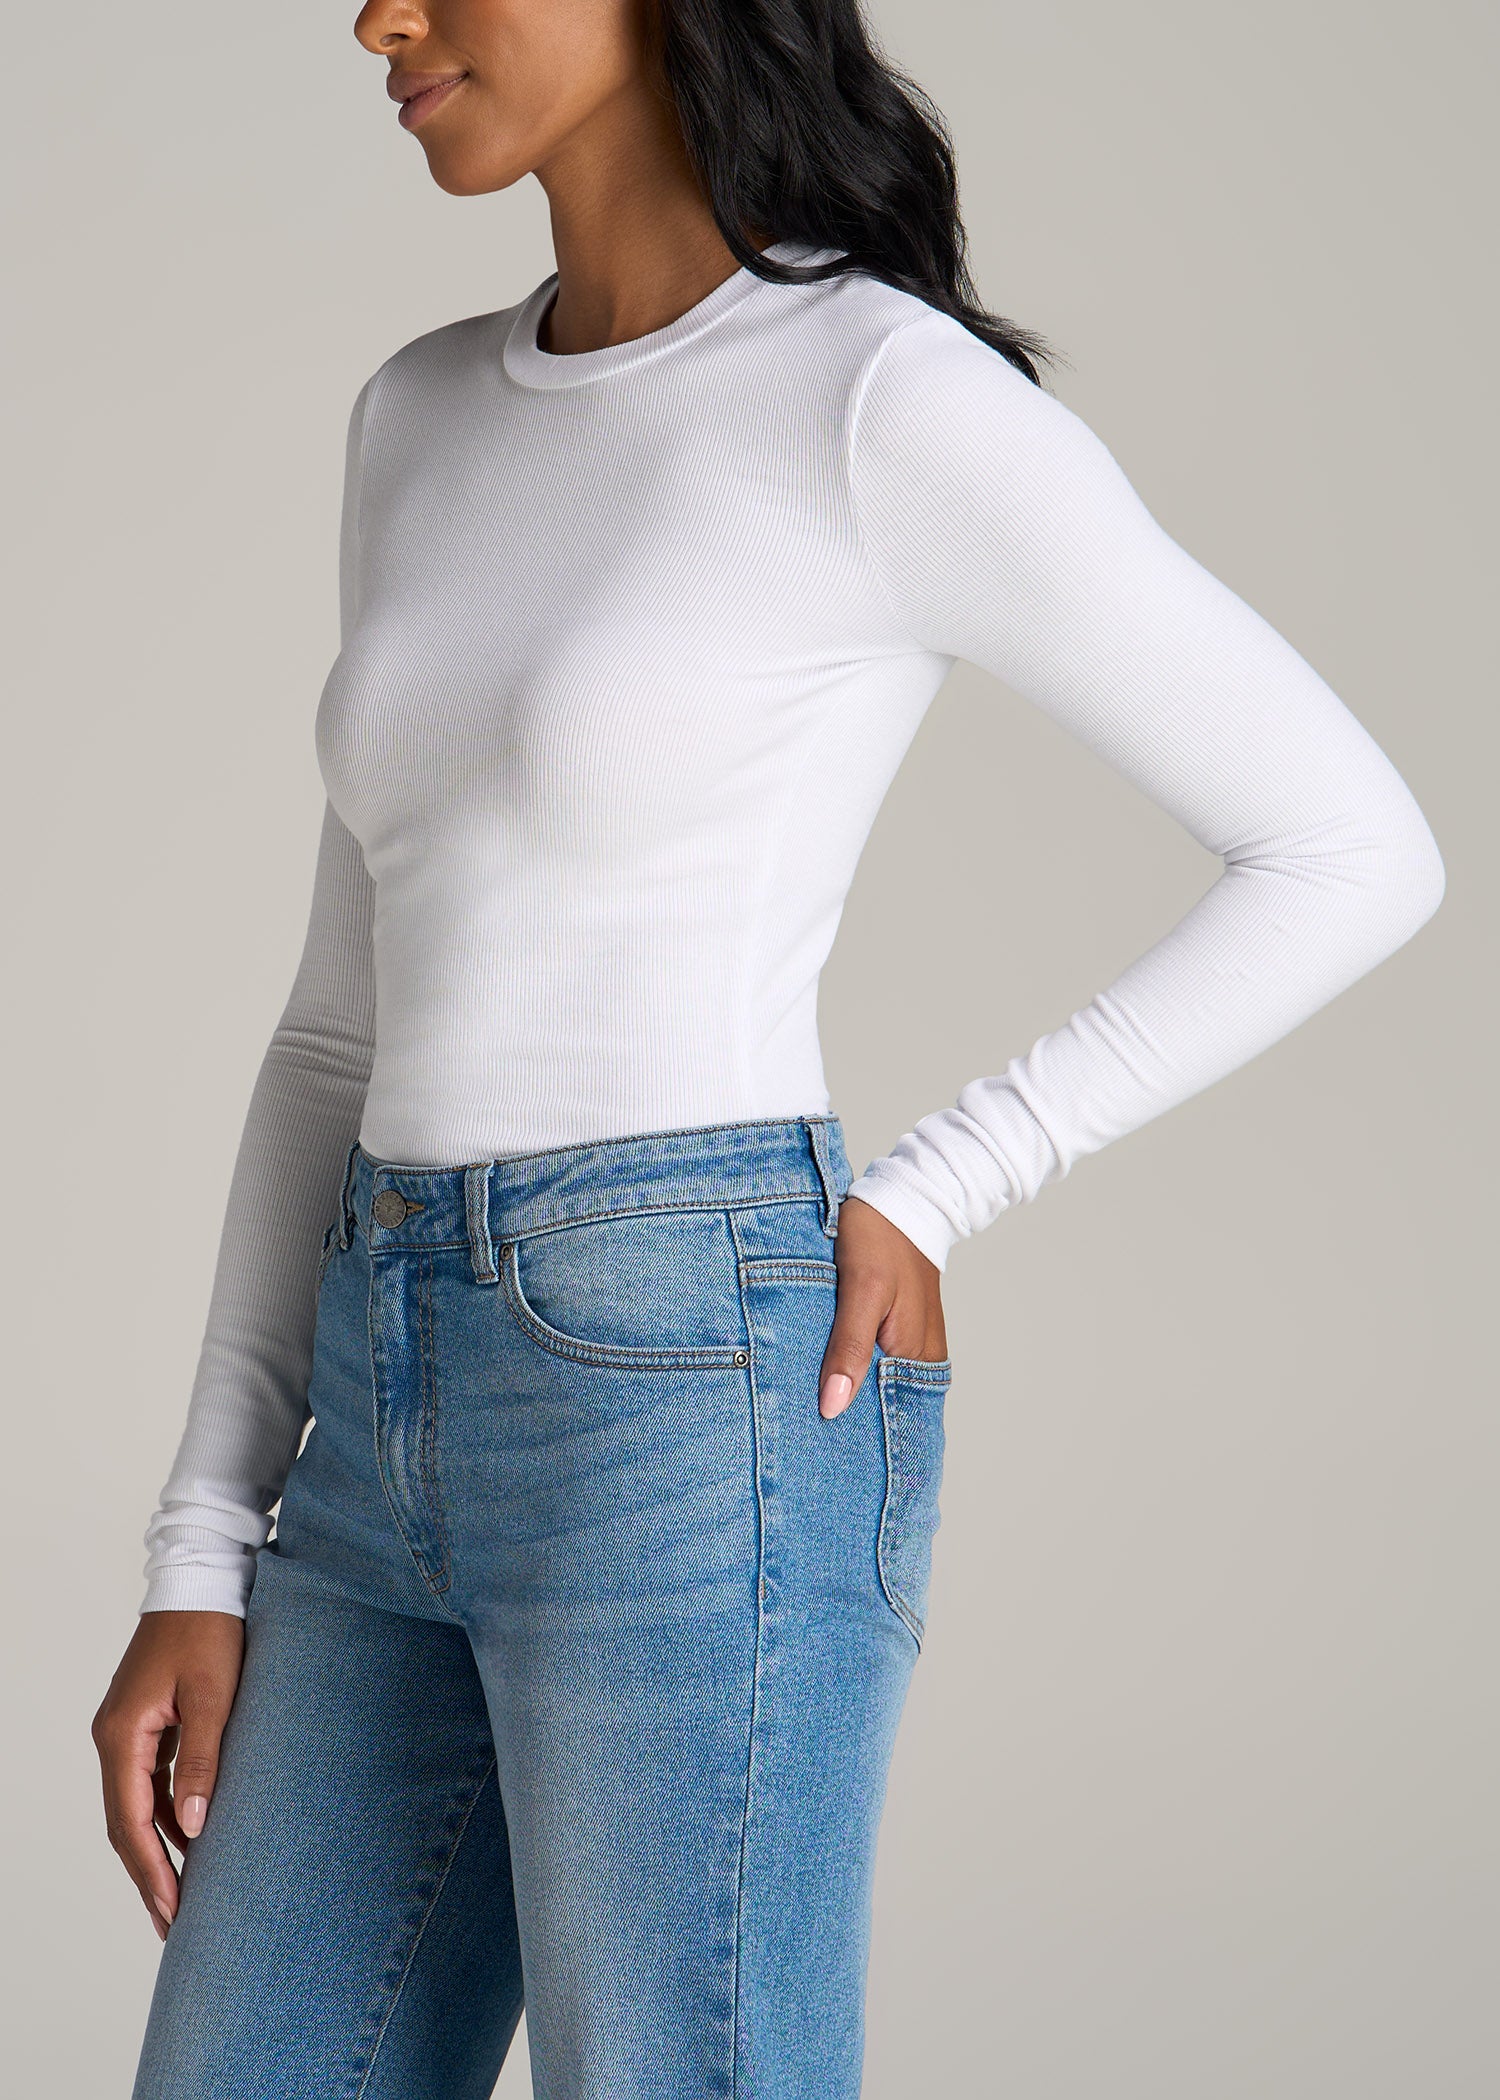 Women's Long Sleeve Top - White